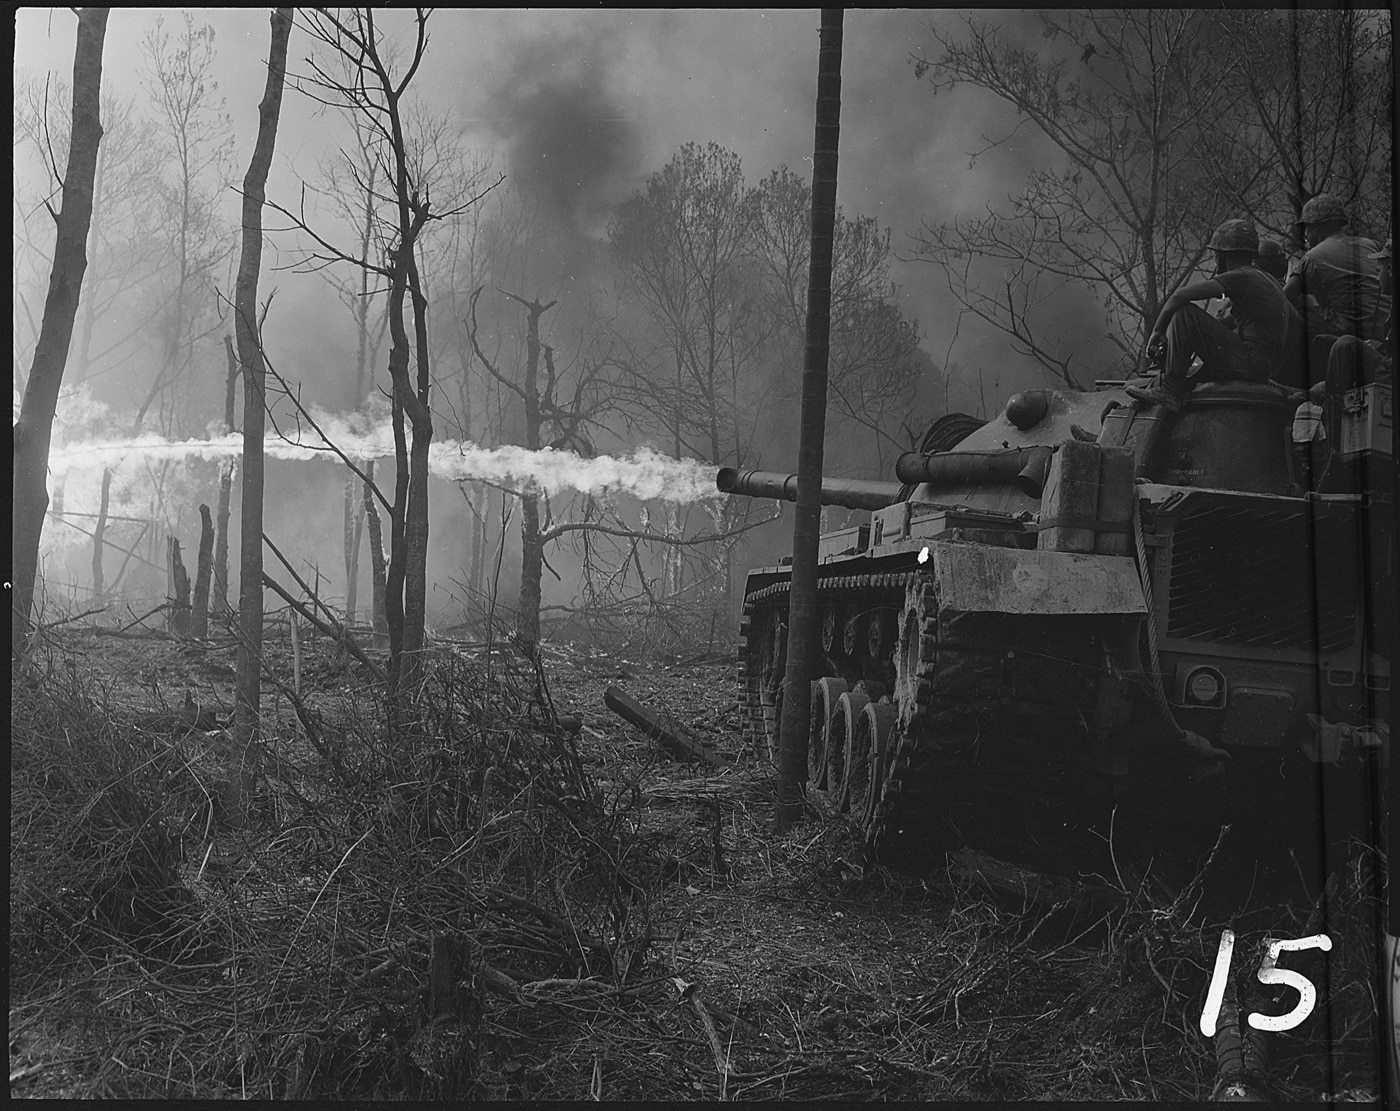 us marines m67 flamthrower tank in vietnam